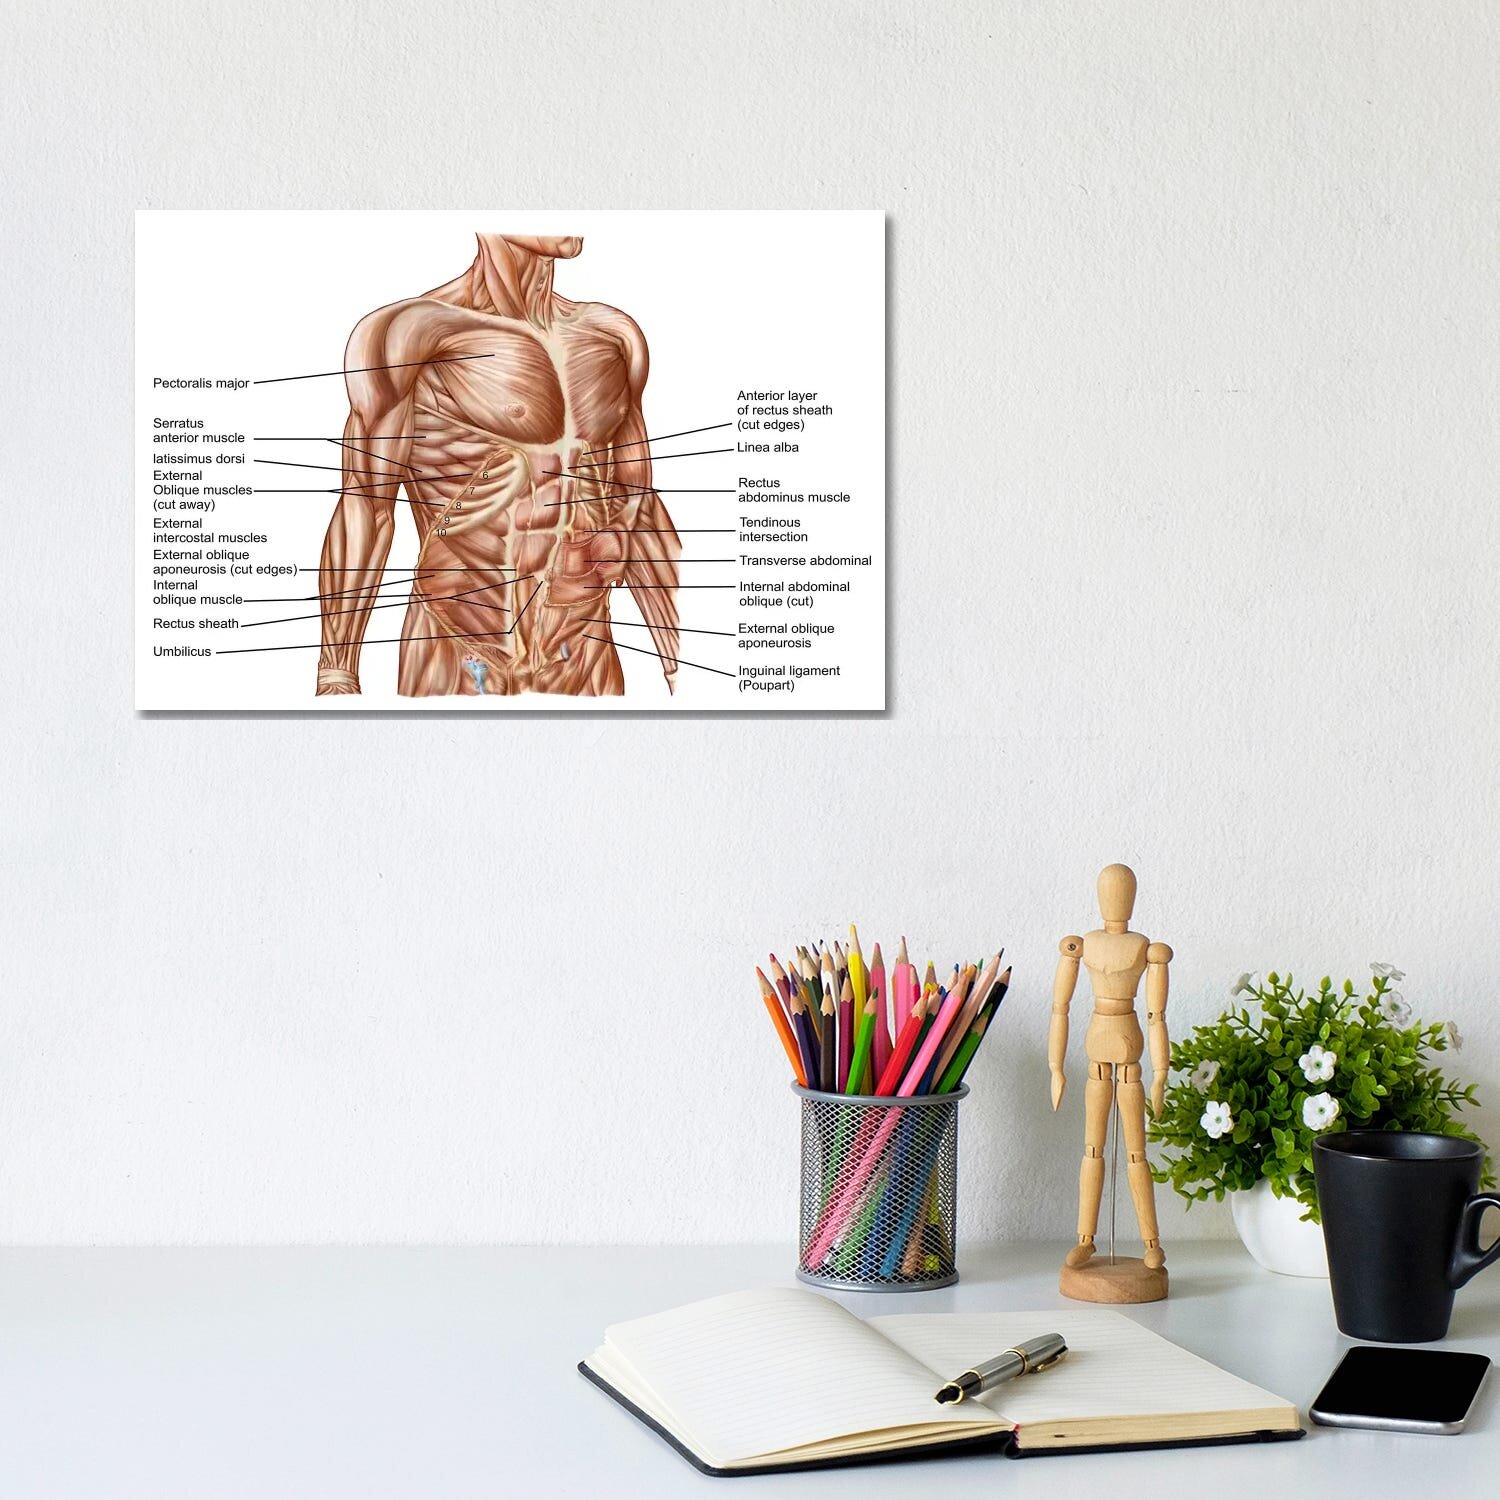 Abdominal muscles, illustration - Stock Image - C047/6057